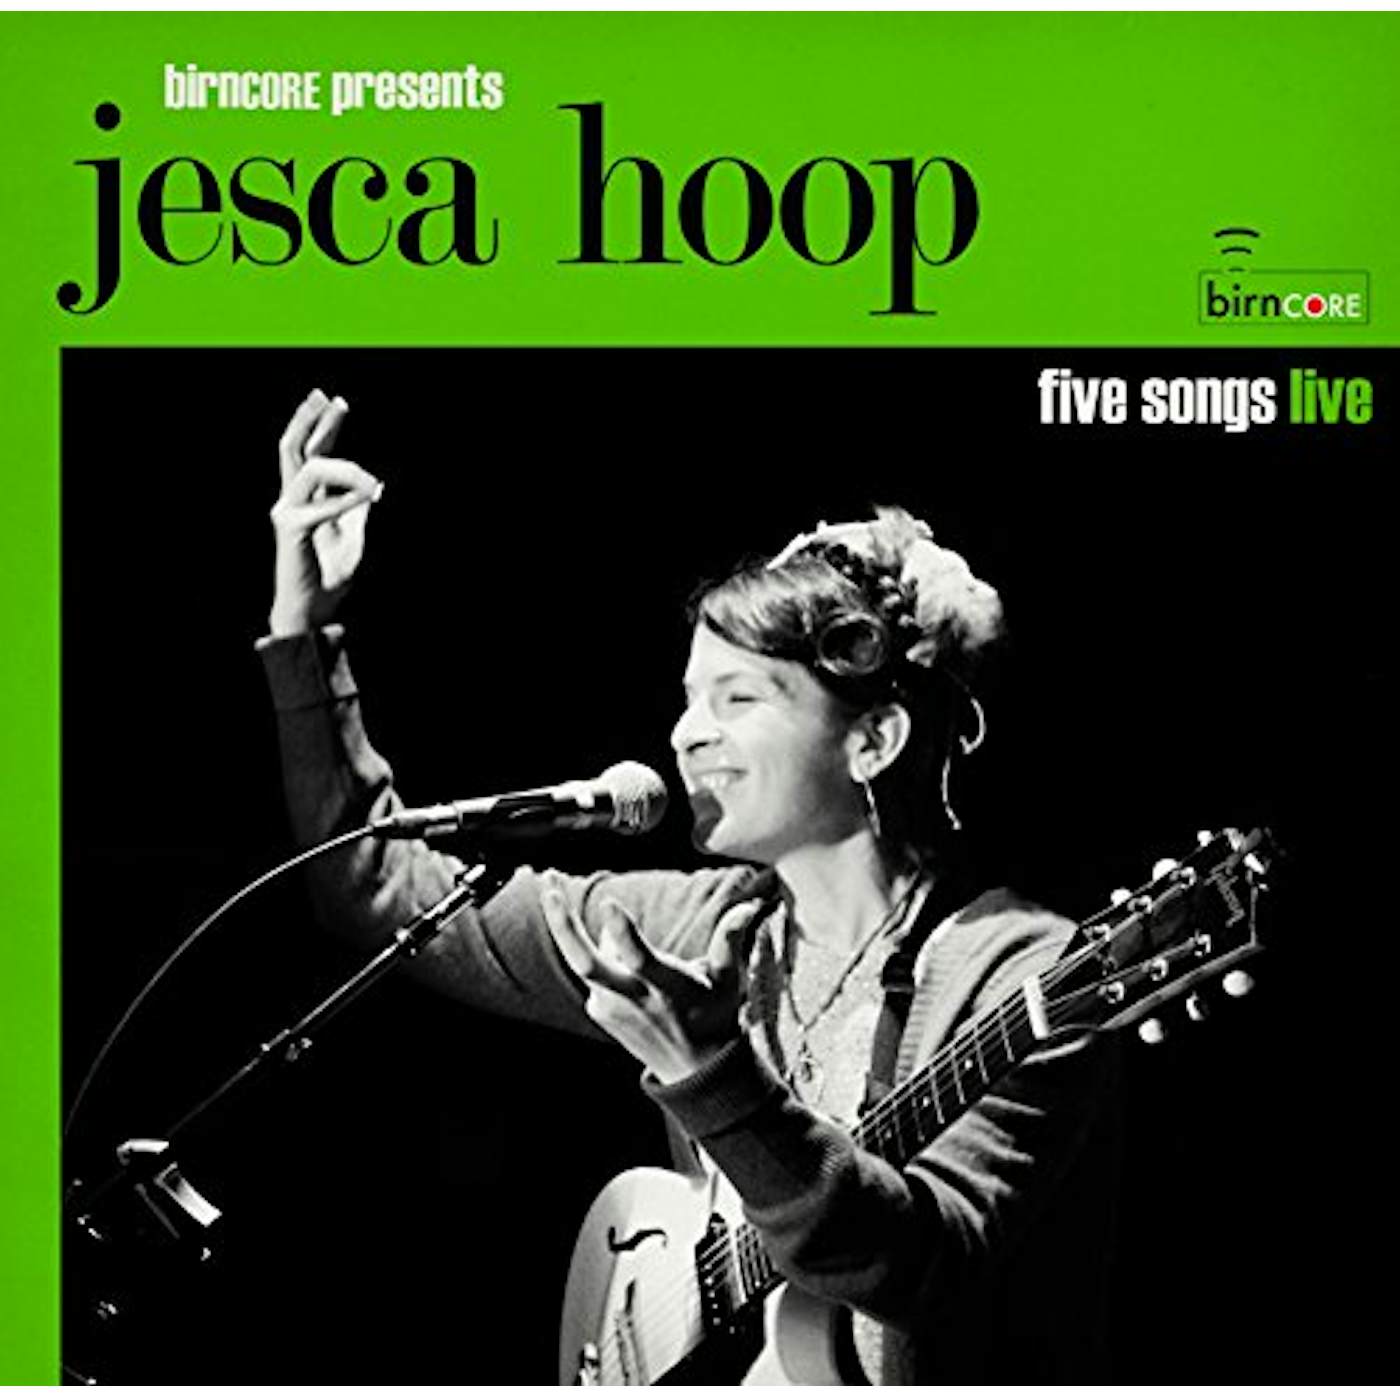 BIRNCORE PRESENTS: JESCA HOOP - 5 SONGS LIVE Vinyl Record